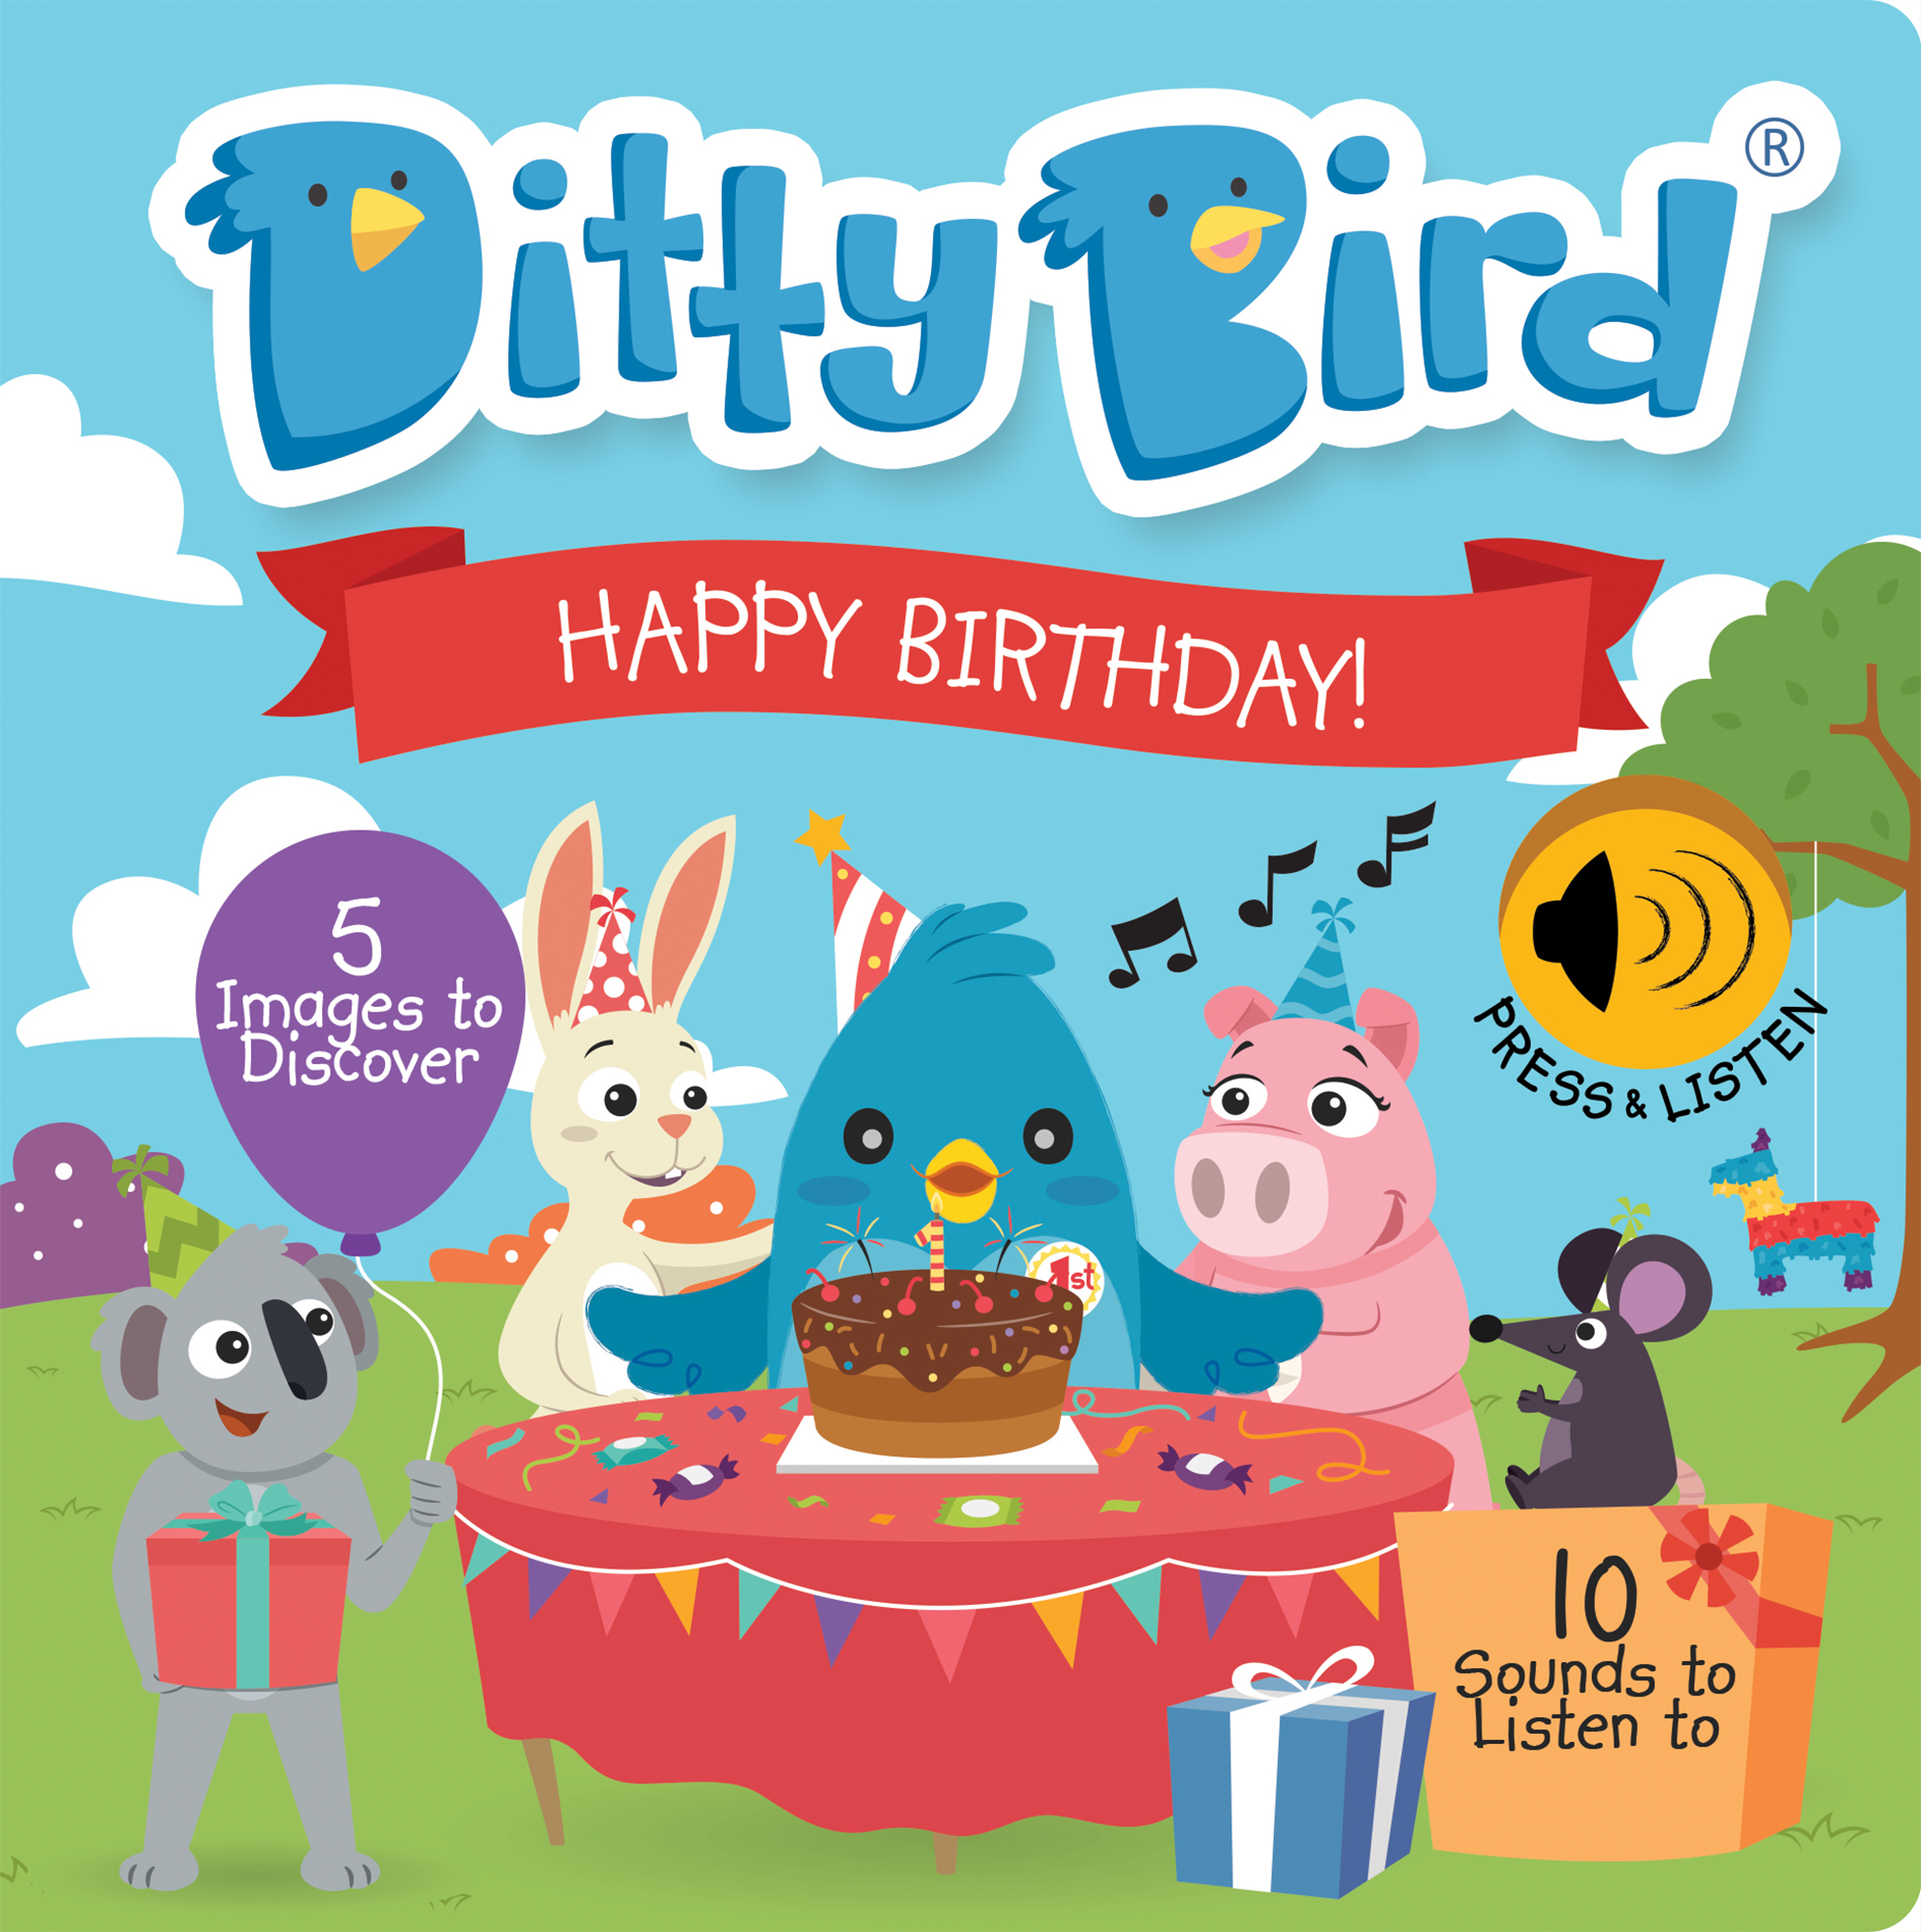 Ditty Bird - Happy Birthday